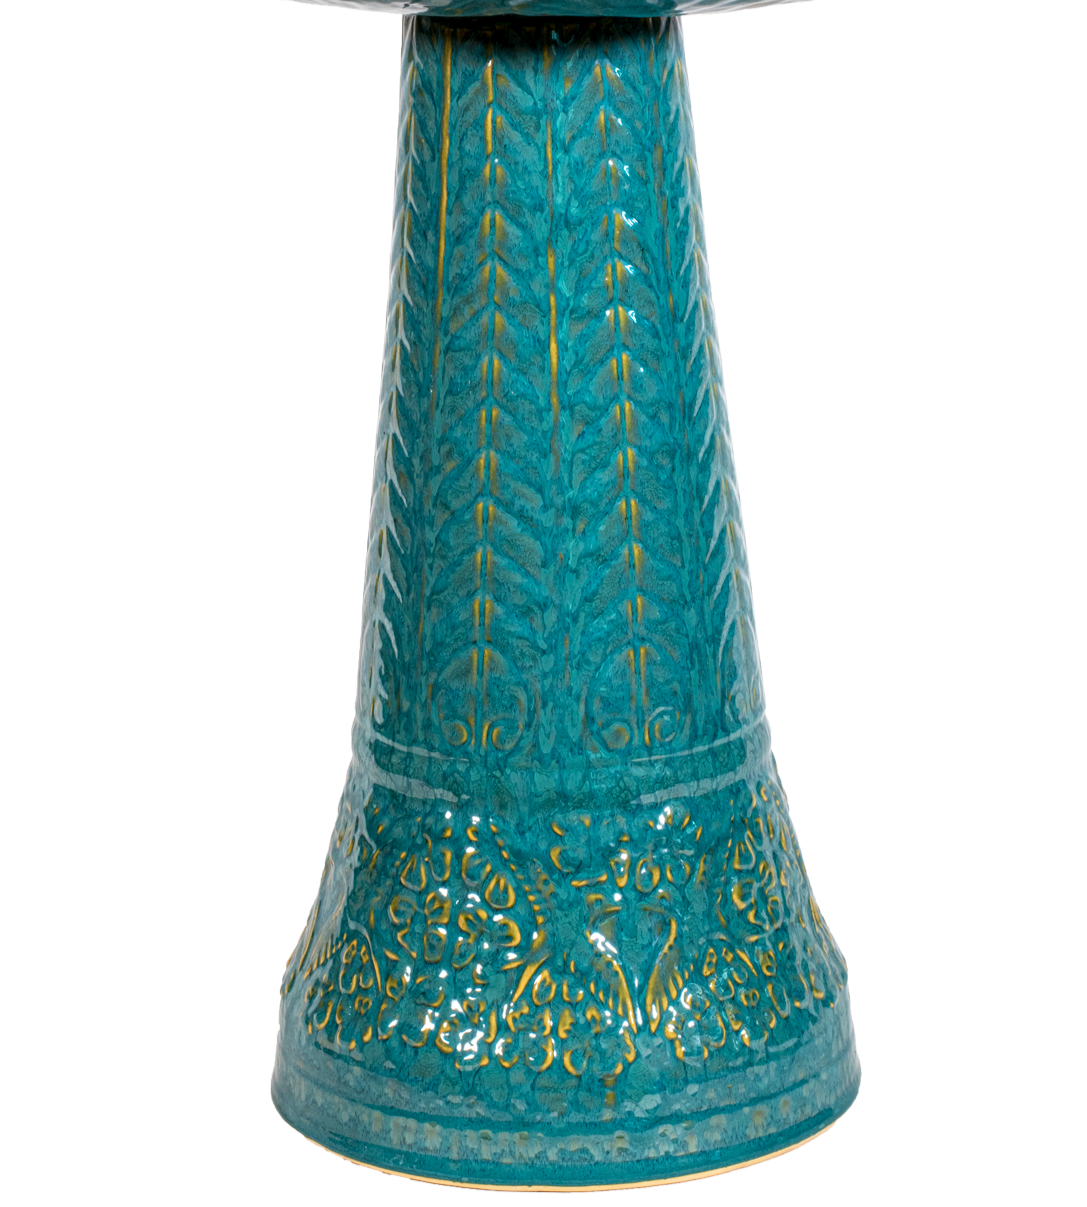 ceramic turquoise birdbath pedestal with birds flowers and a chevron design